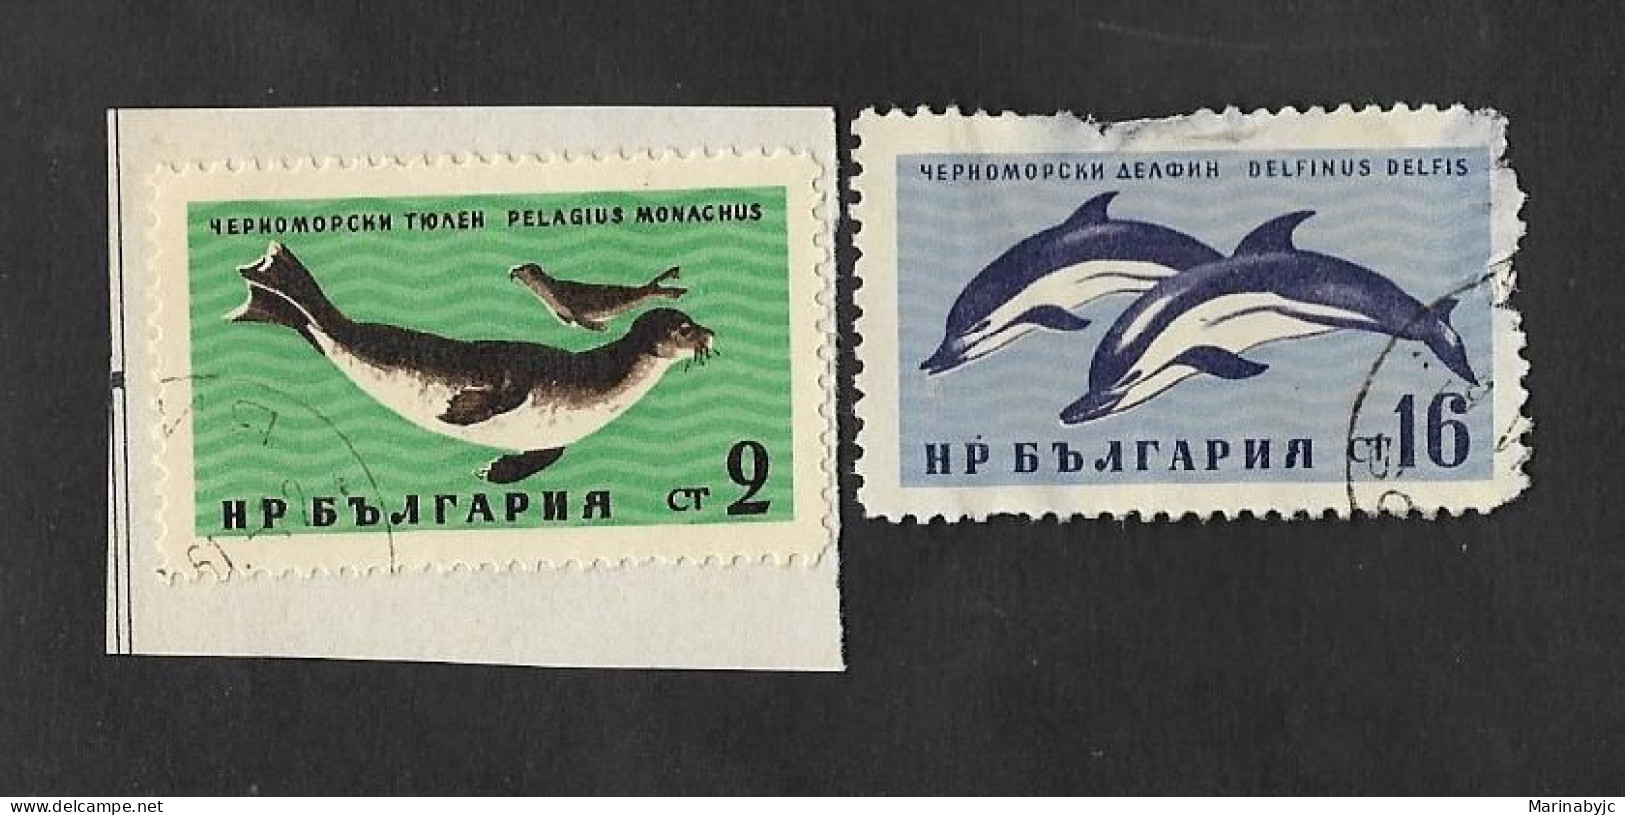 SE)1961 BULGARIA, BLACK SEA WILDLIFE, MEDITERRANEAN MONK SEAL & DOLPHINS, USED - Used Stamps